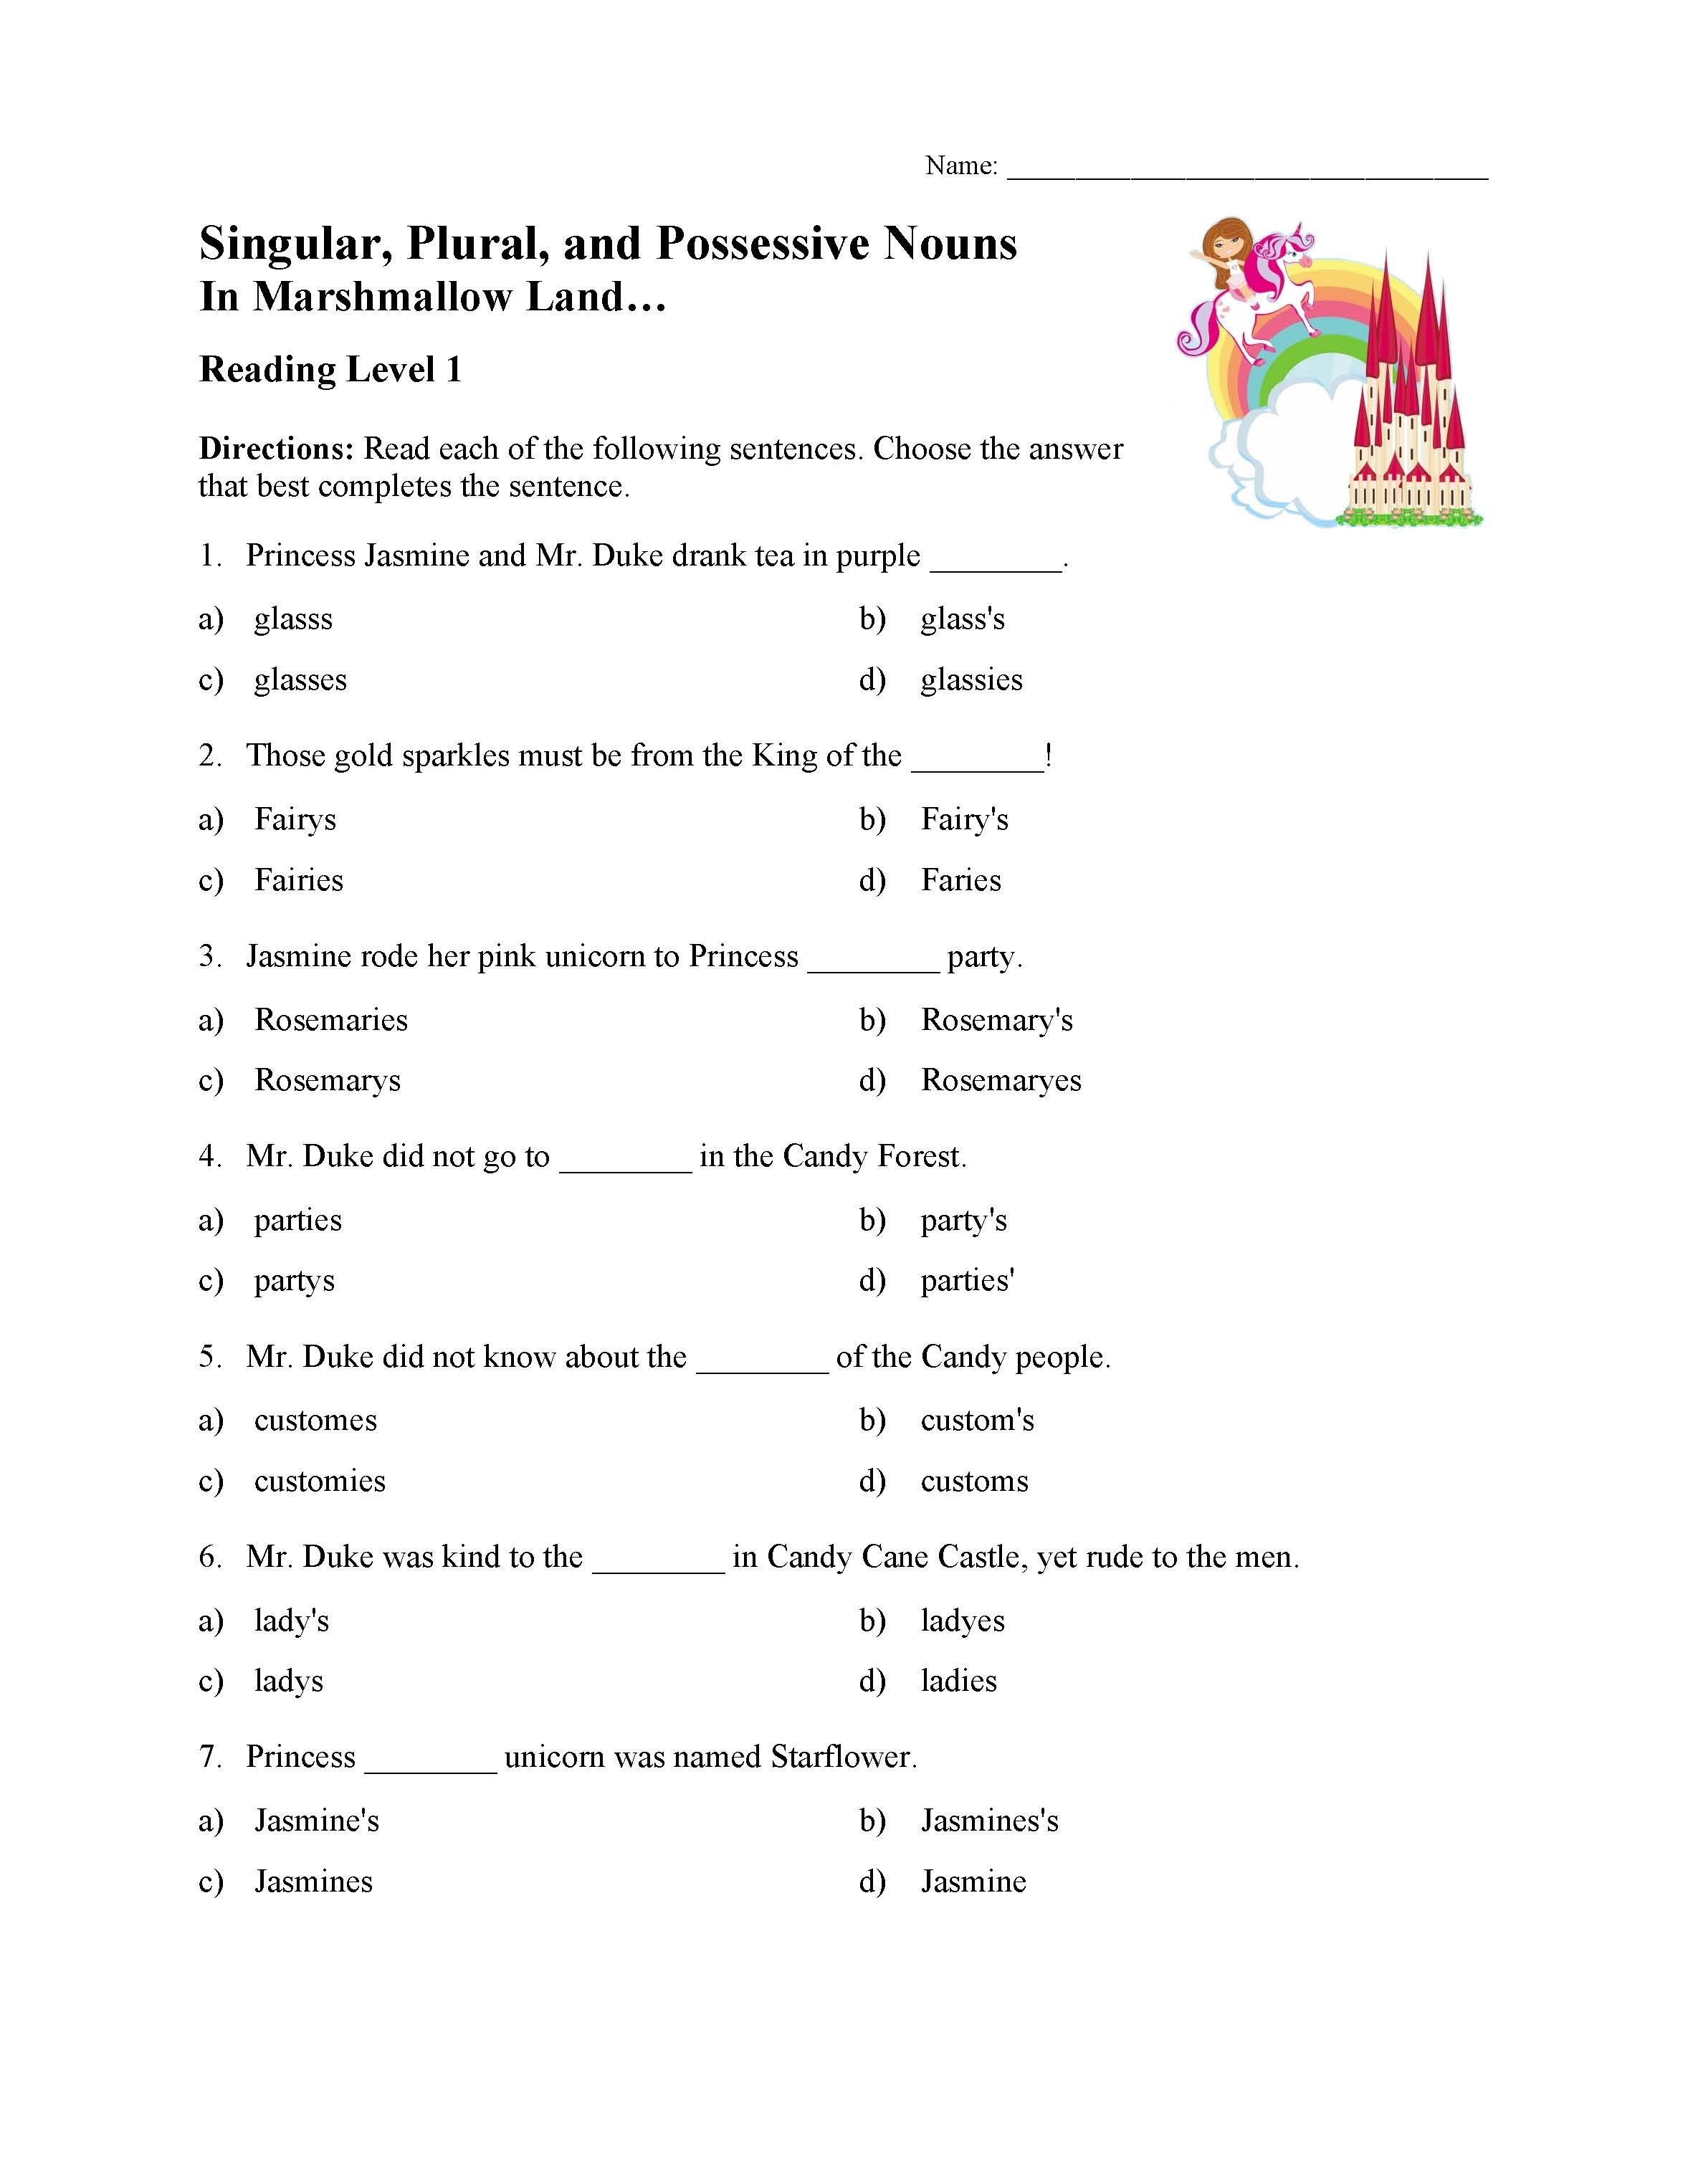 Plural Nouns Worksheet 5th Grade Singular Plural and Possessive Nouns Test 1